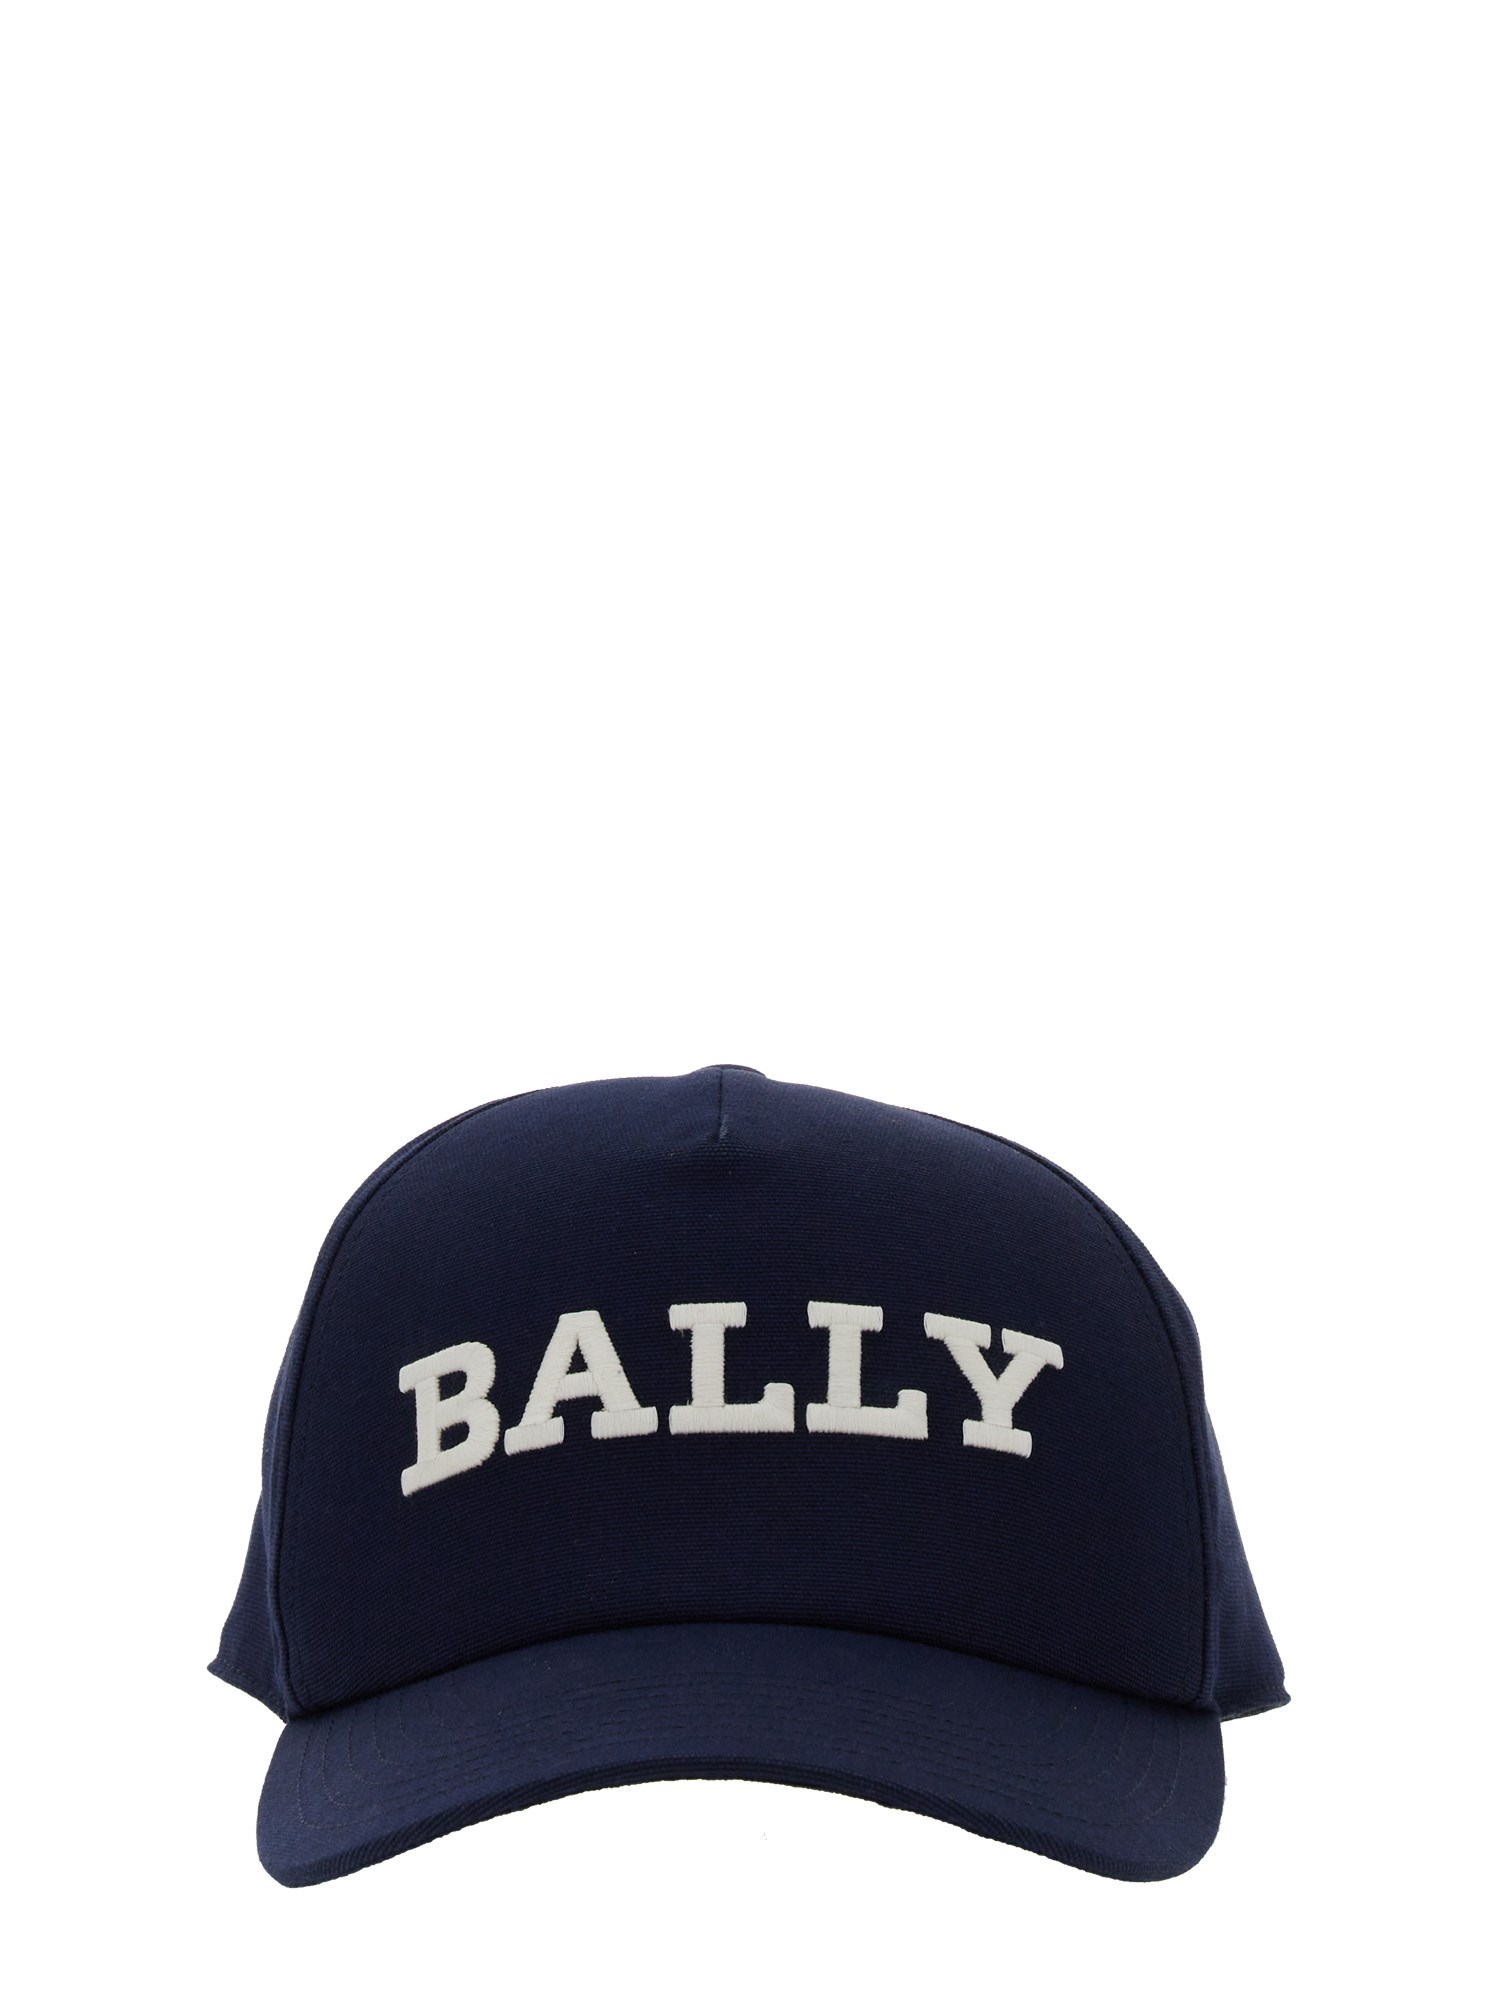 BALLY BASEBALL CAP